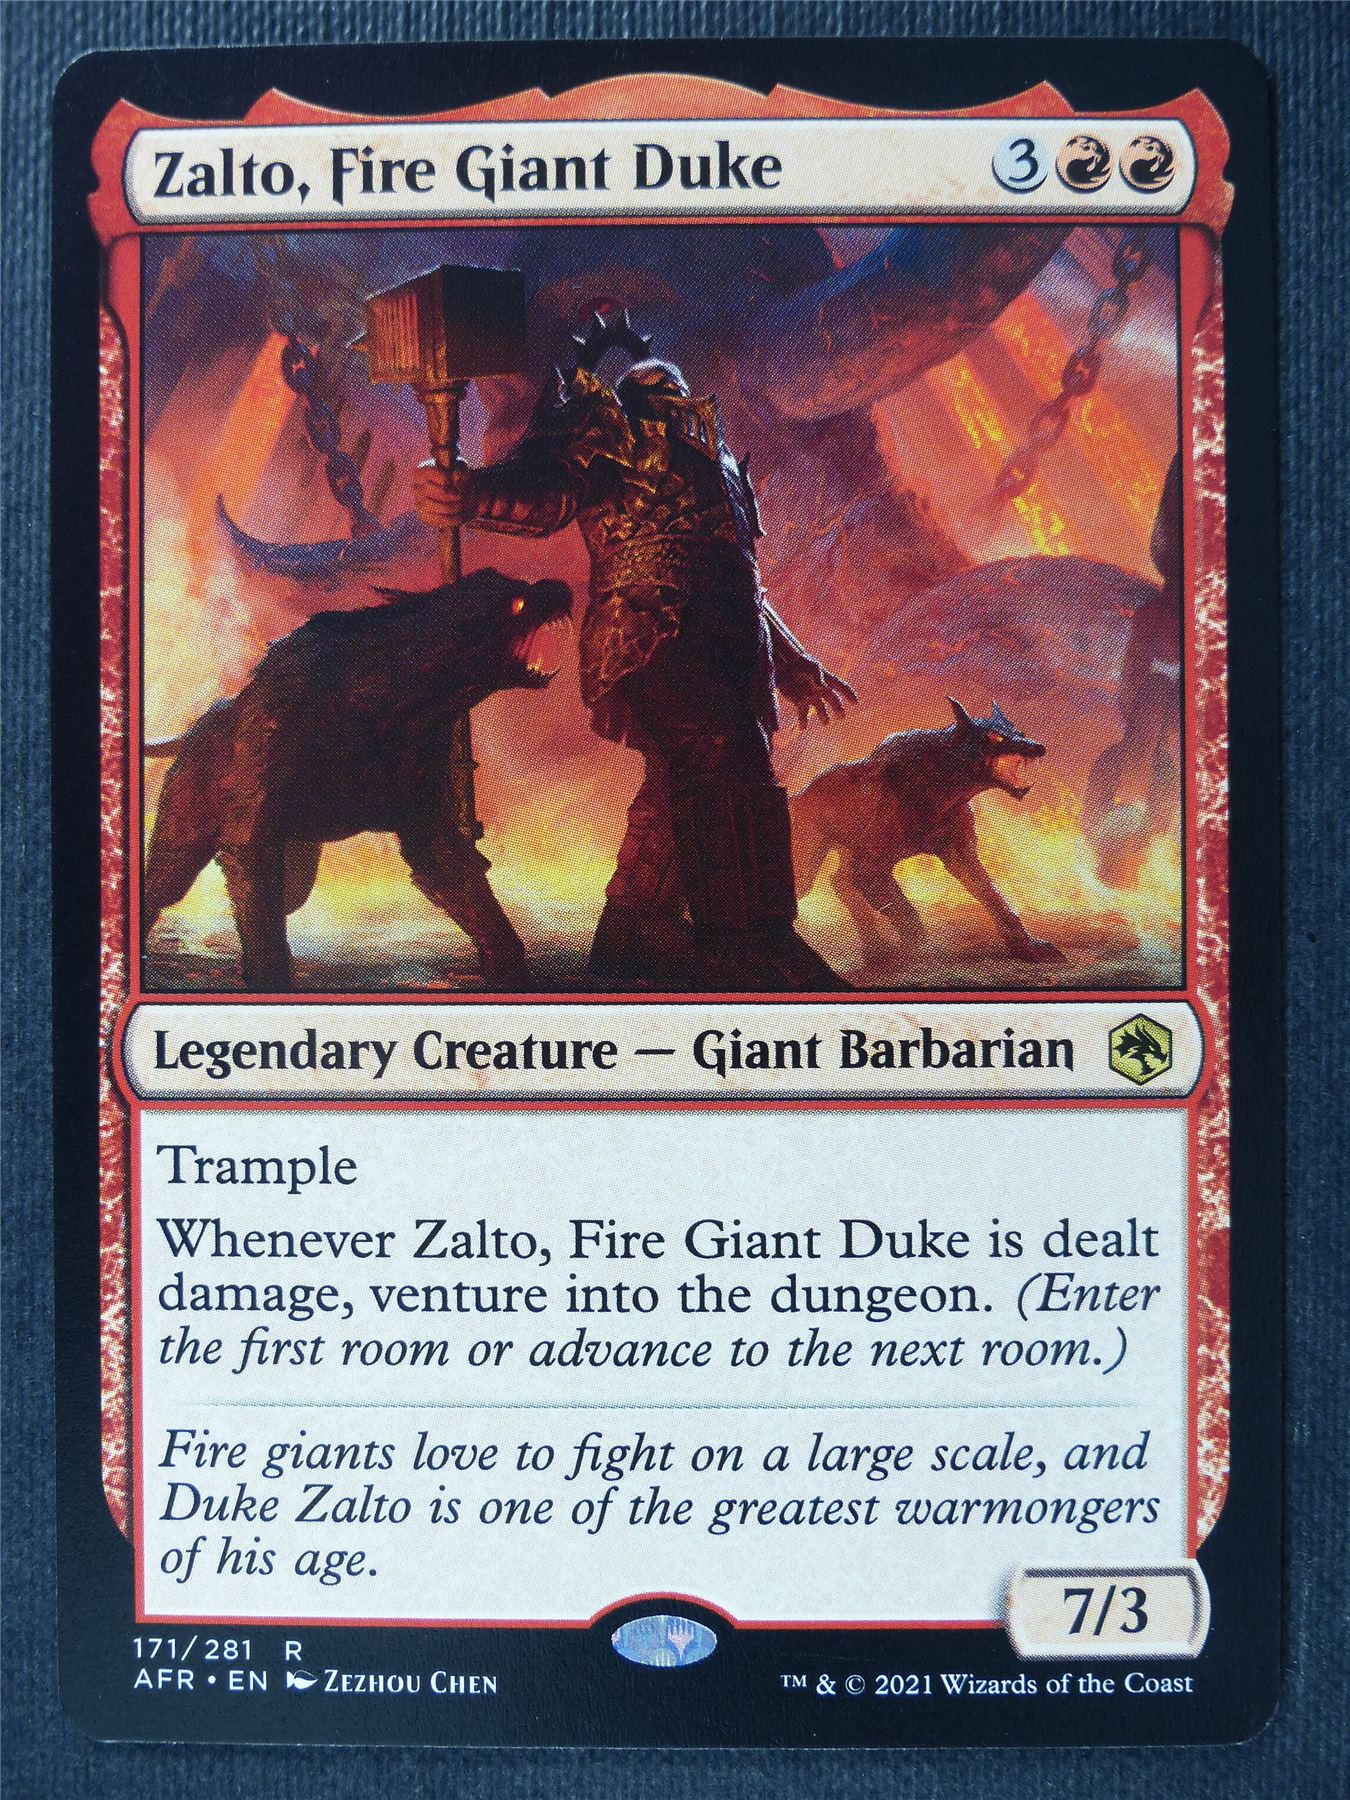 Zalto Fire Giant Duke - AFR - Mtg Card #29N